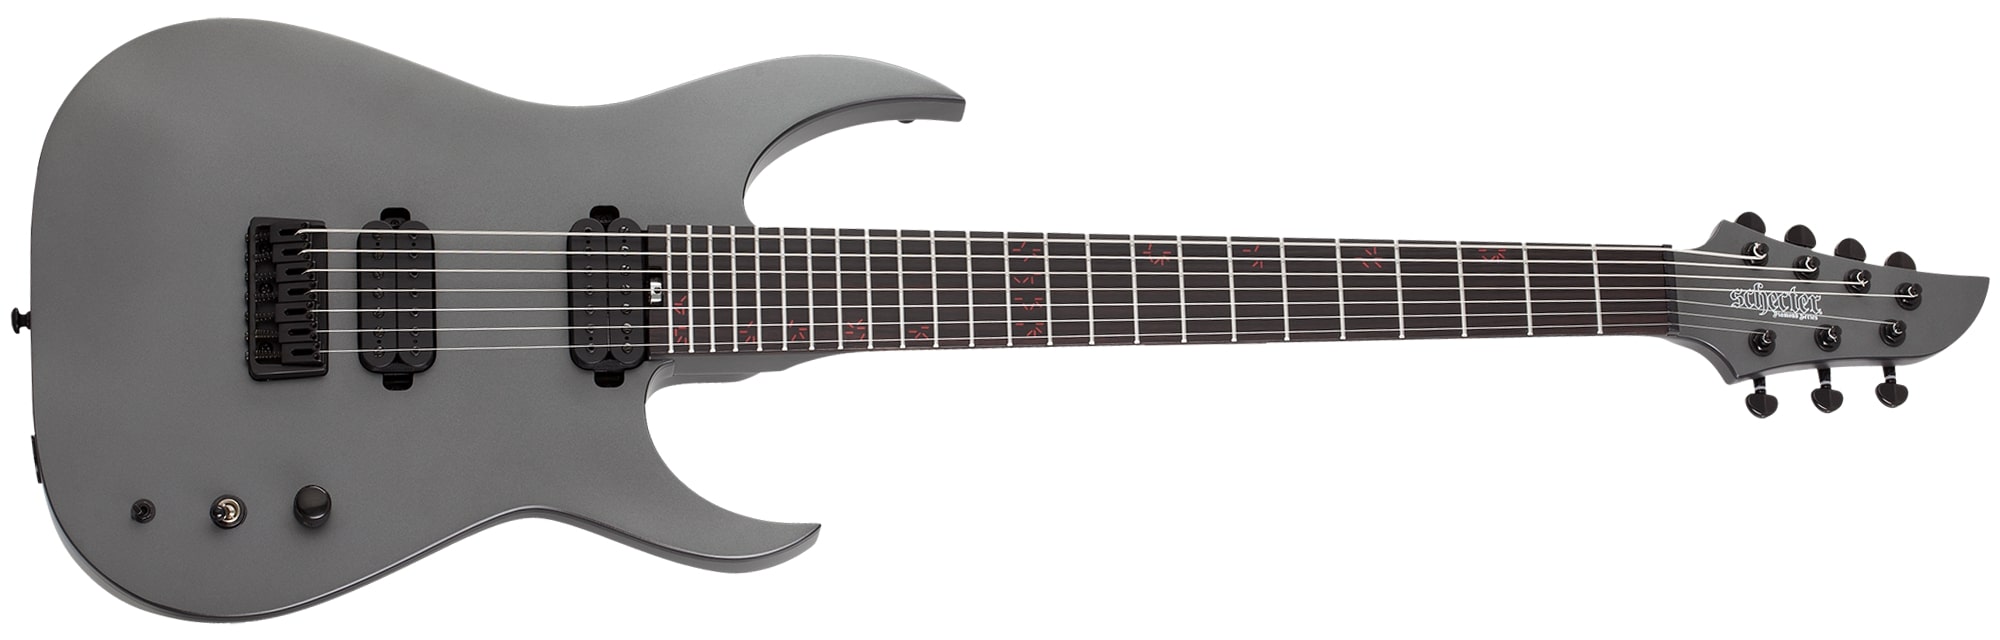 Schecter Keith Merrow KM-7 MK-III Standard Electric Guitar Stealth Grey 832-SHC